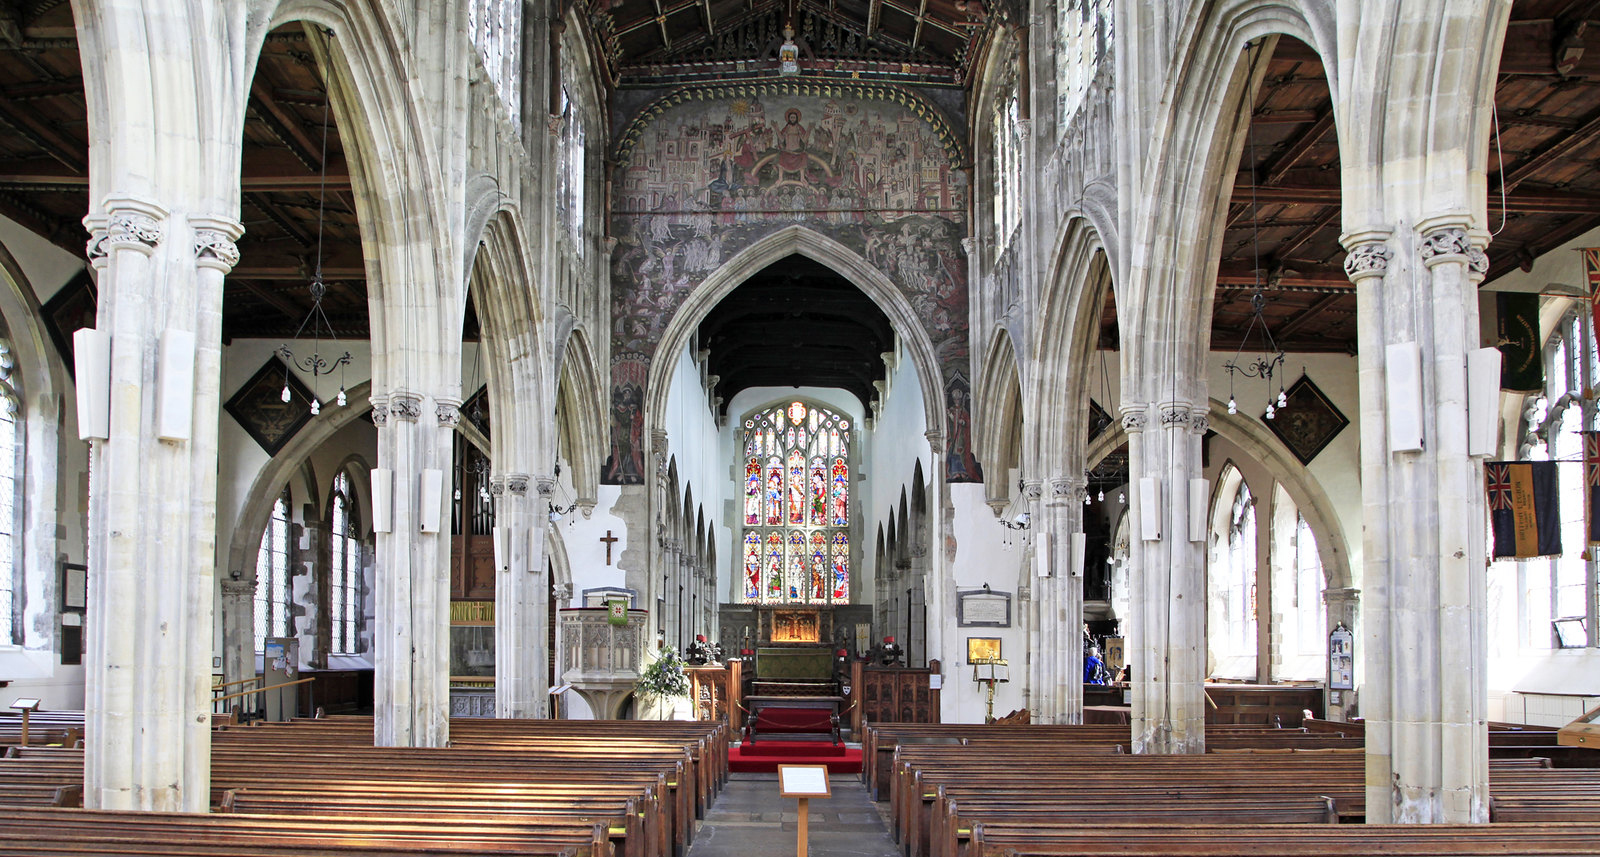 St Thomas's Church, Salisbury